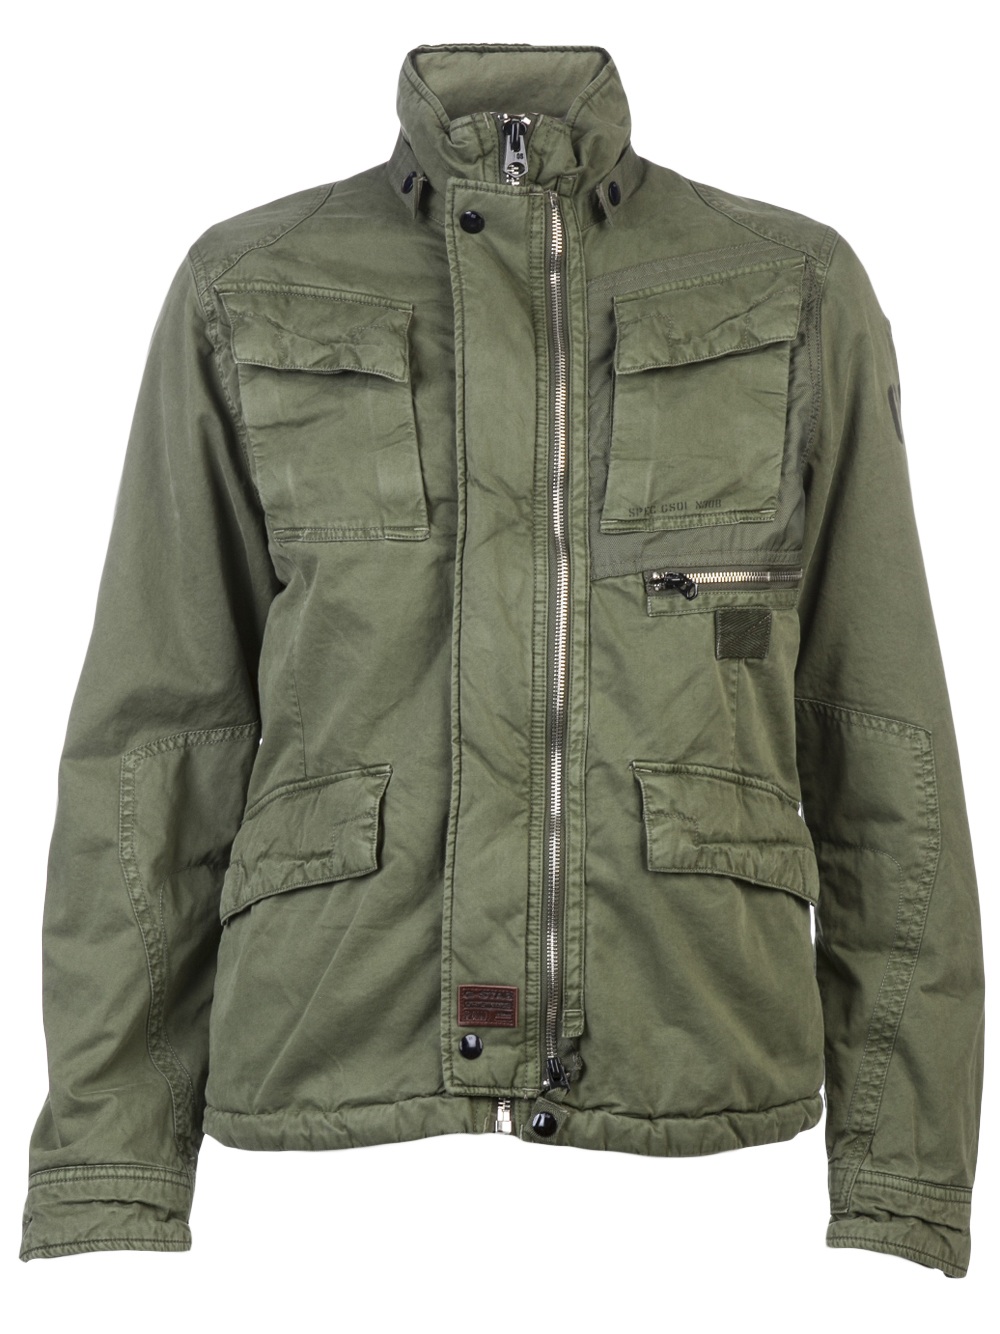 G-Star RAW Aero Field Jacket in Sage (Green) for Men - Lyst